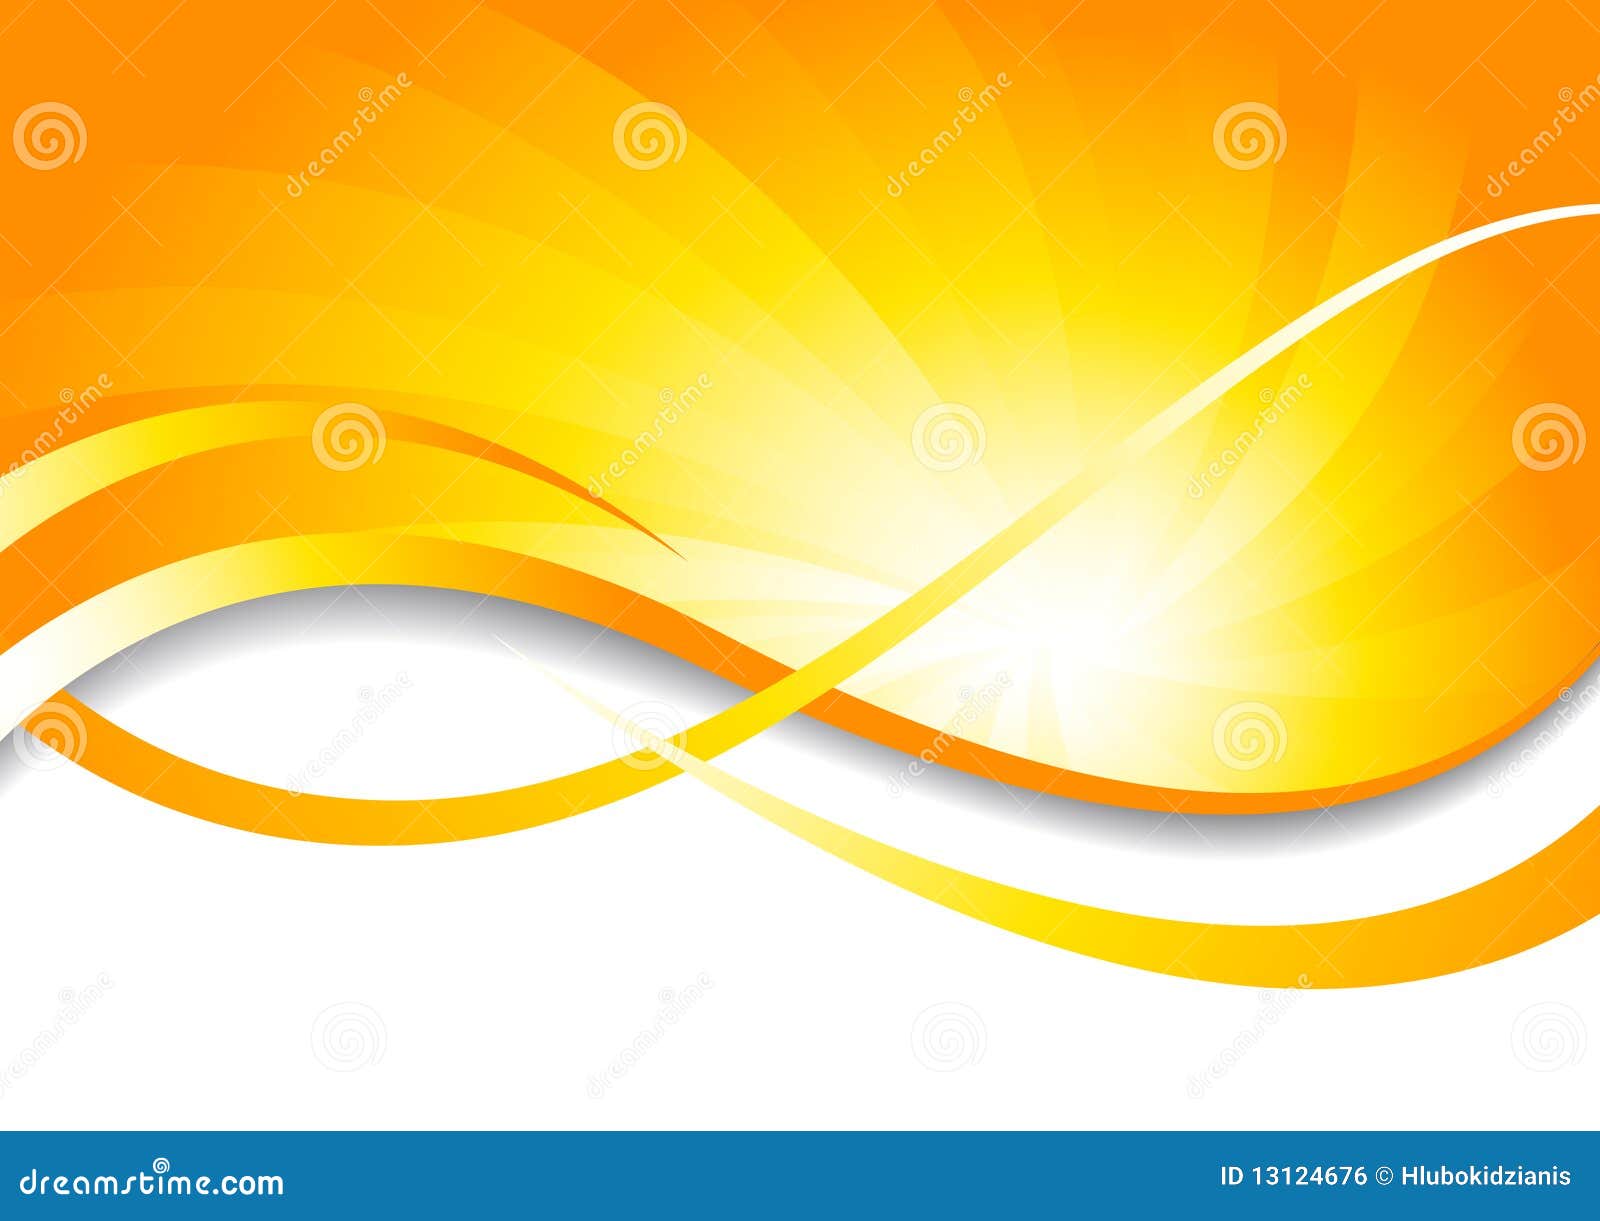 Vector Bright Background in Yellow Stock Vector - Illustration of orange,  creative: 13124676